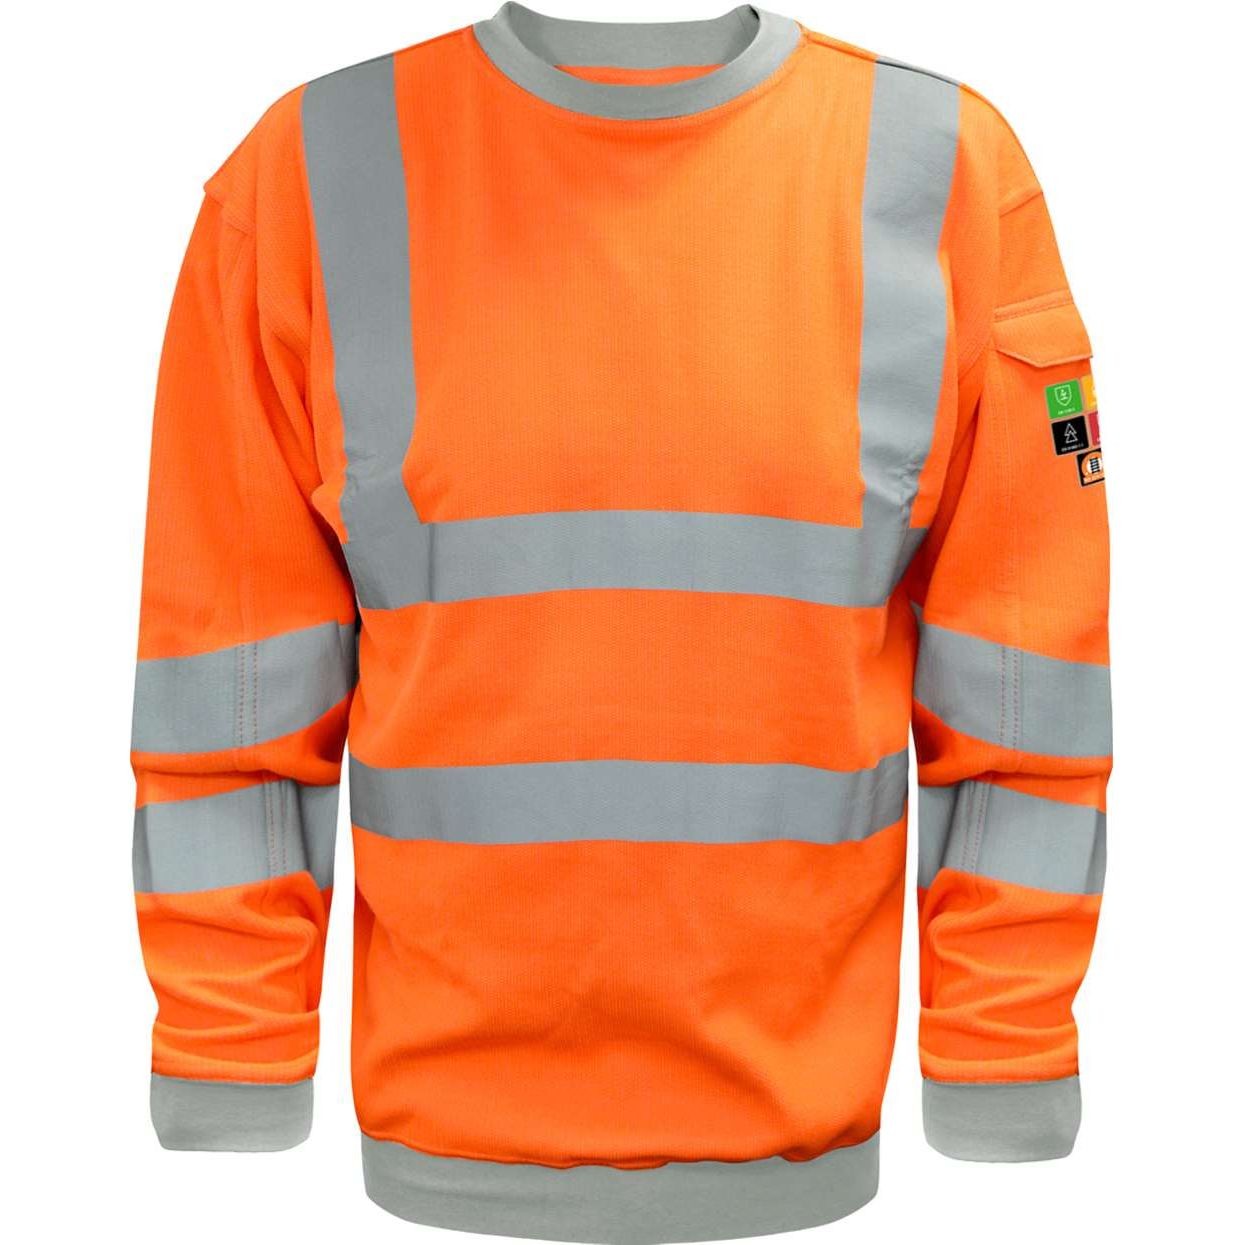 Theorem FR ARC Hi Vis Orange Sweatshirt